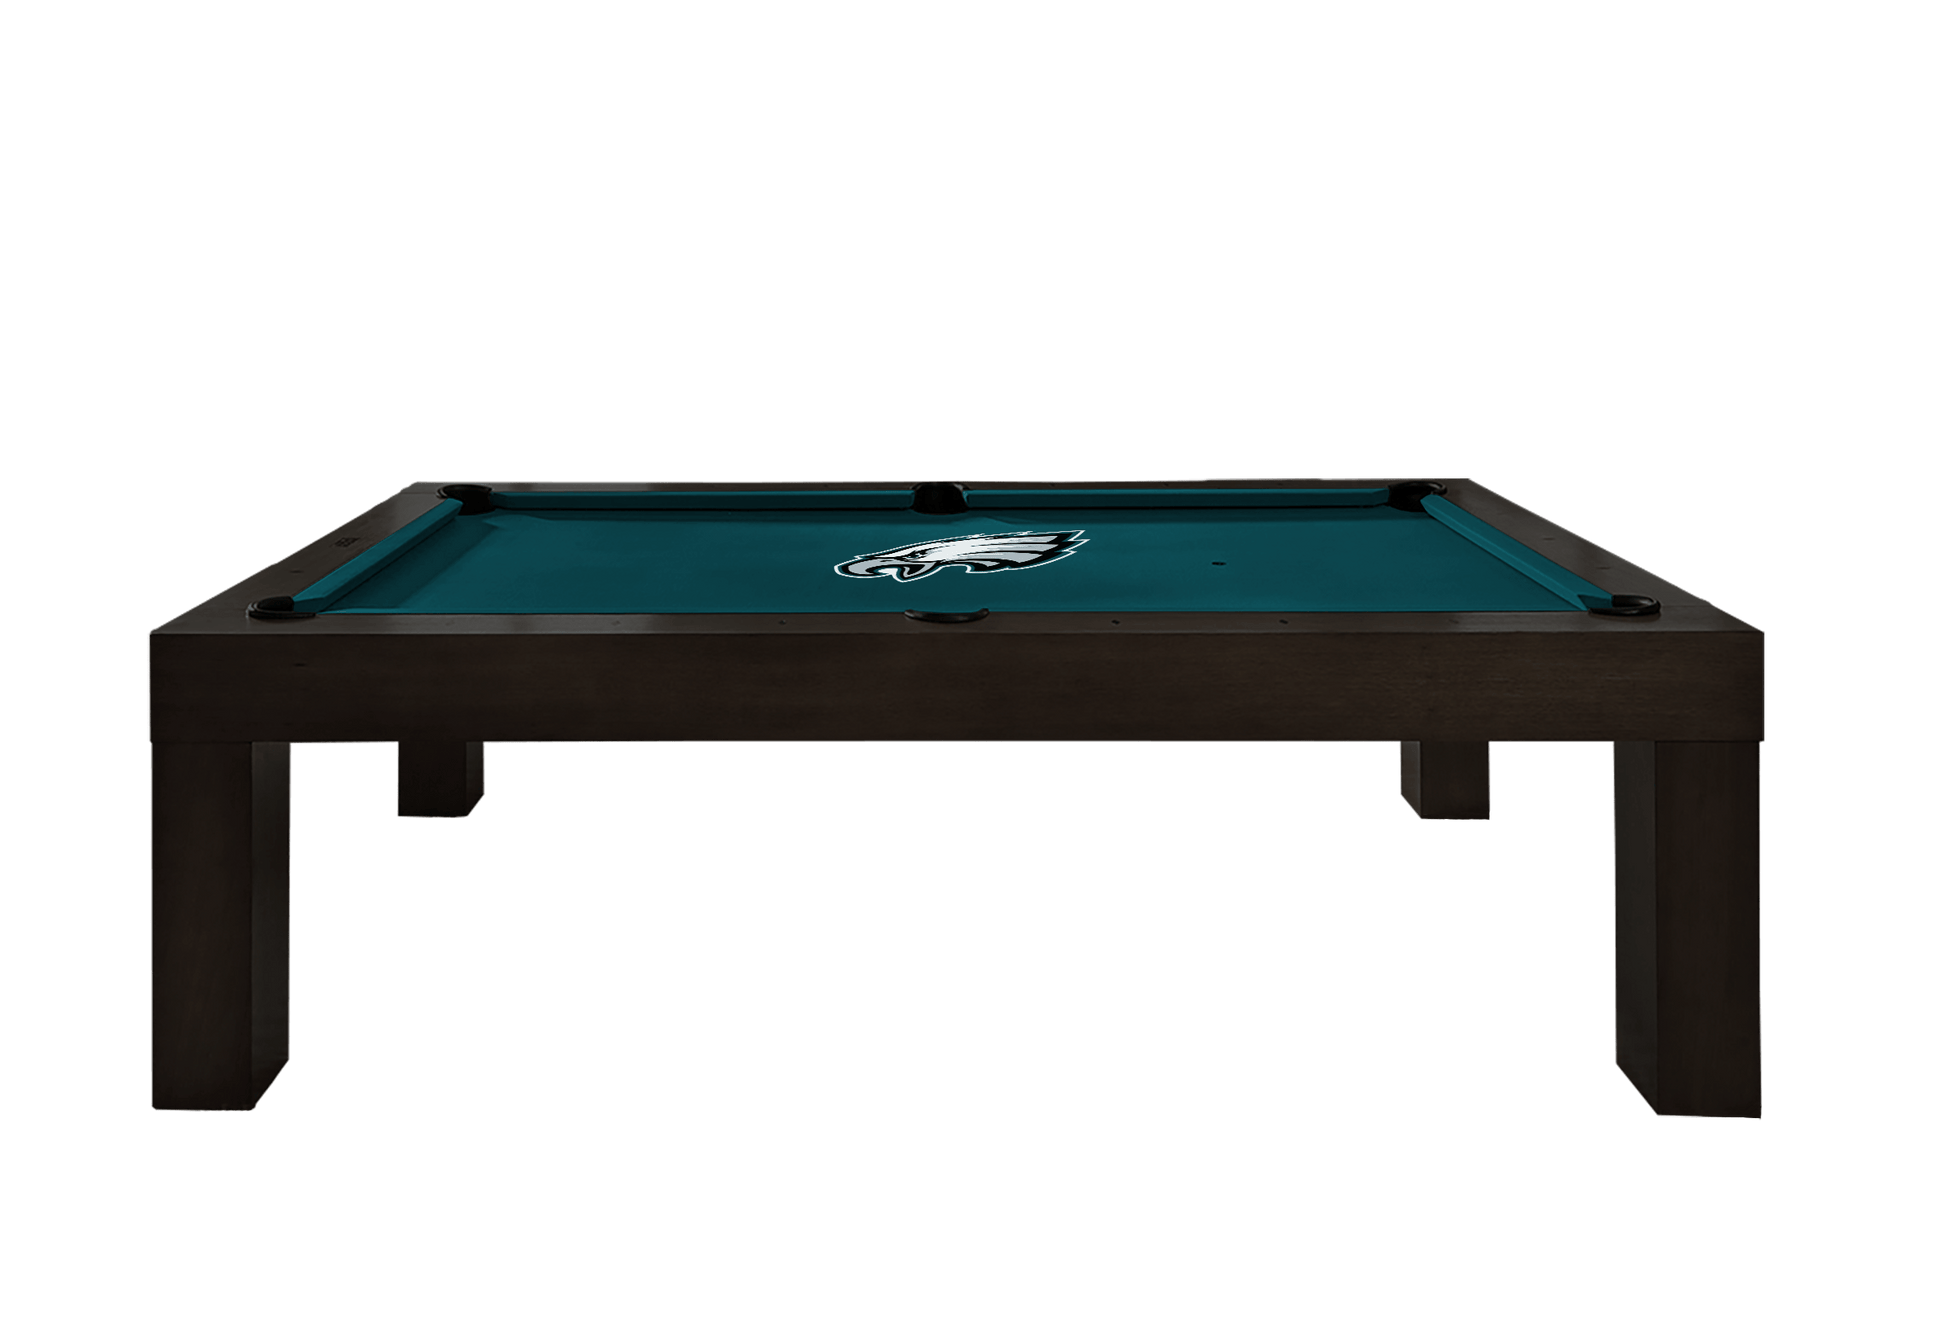 Philadelphia Eagles Premium Pool Table Bundle - Black Ash Pool Bundle Home Arcade Games   